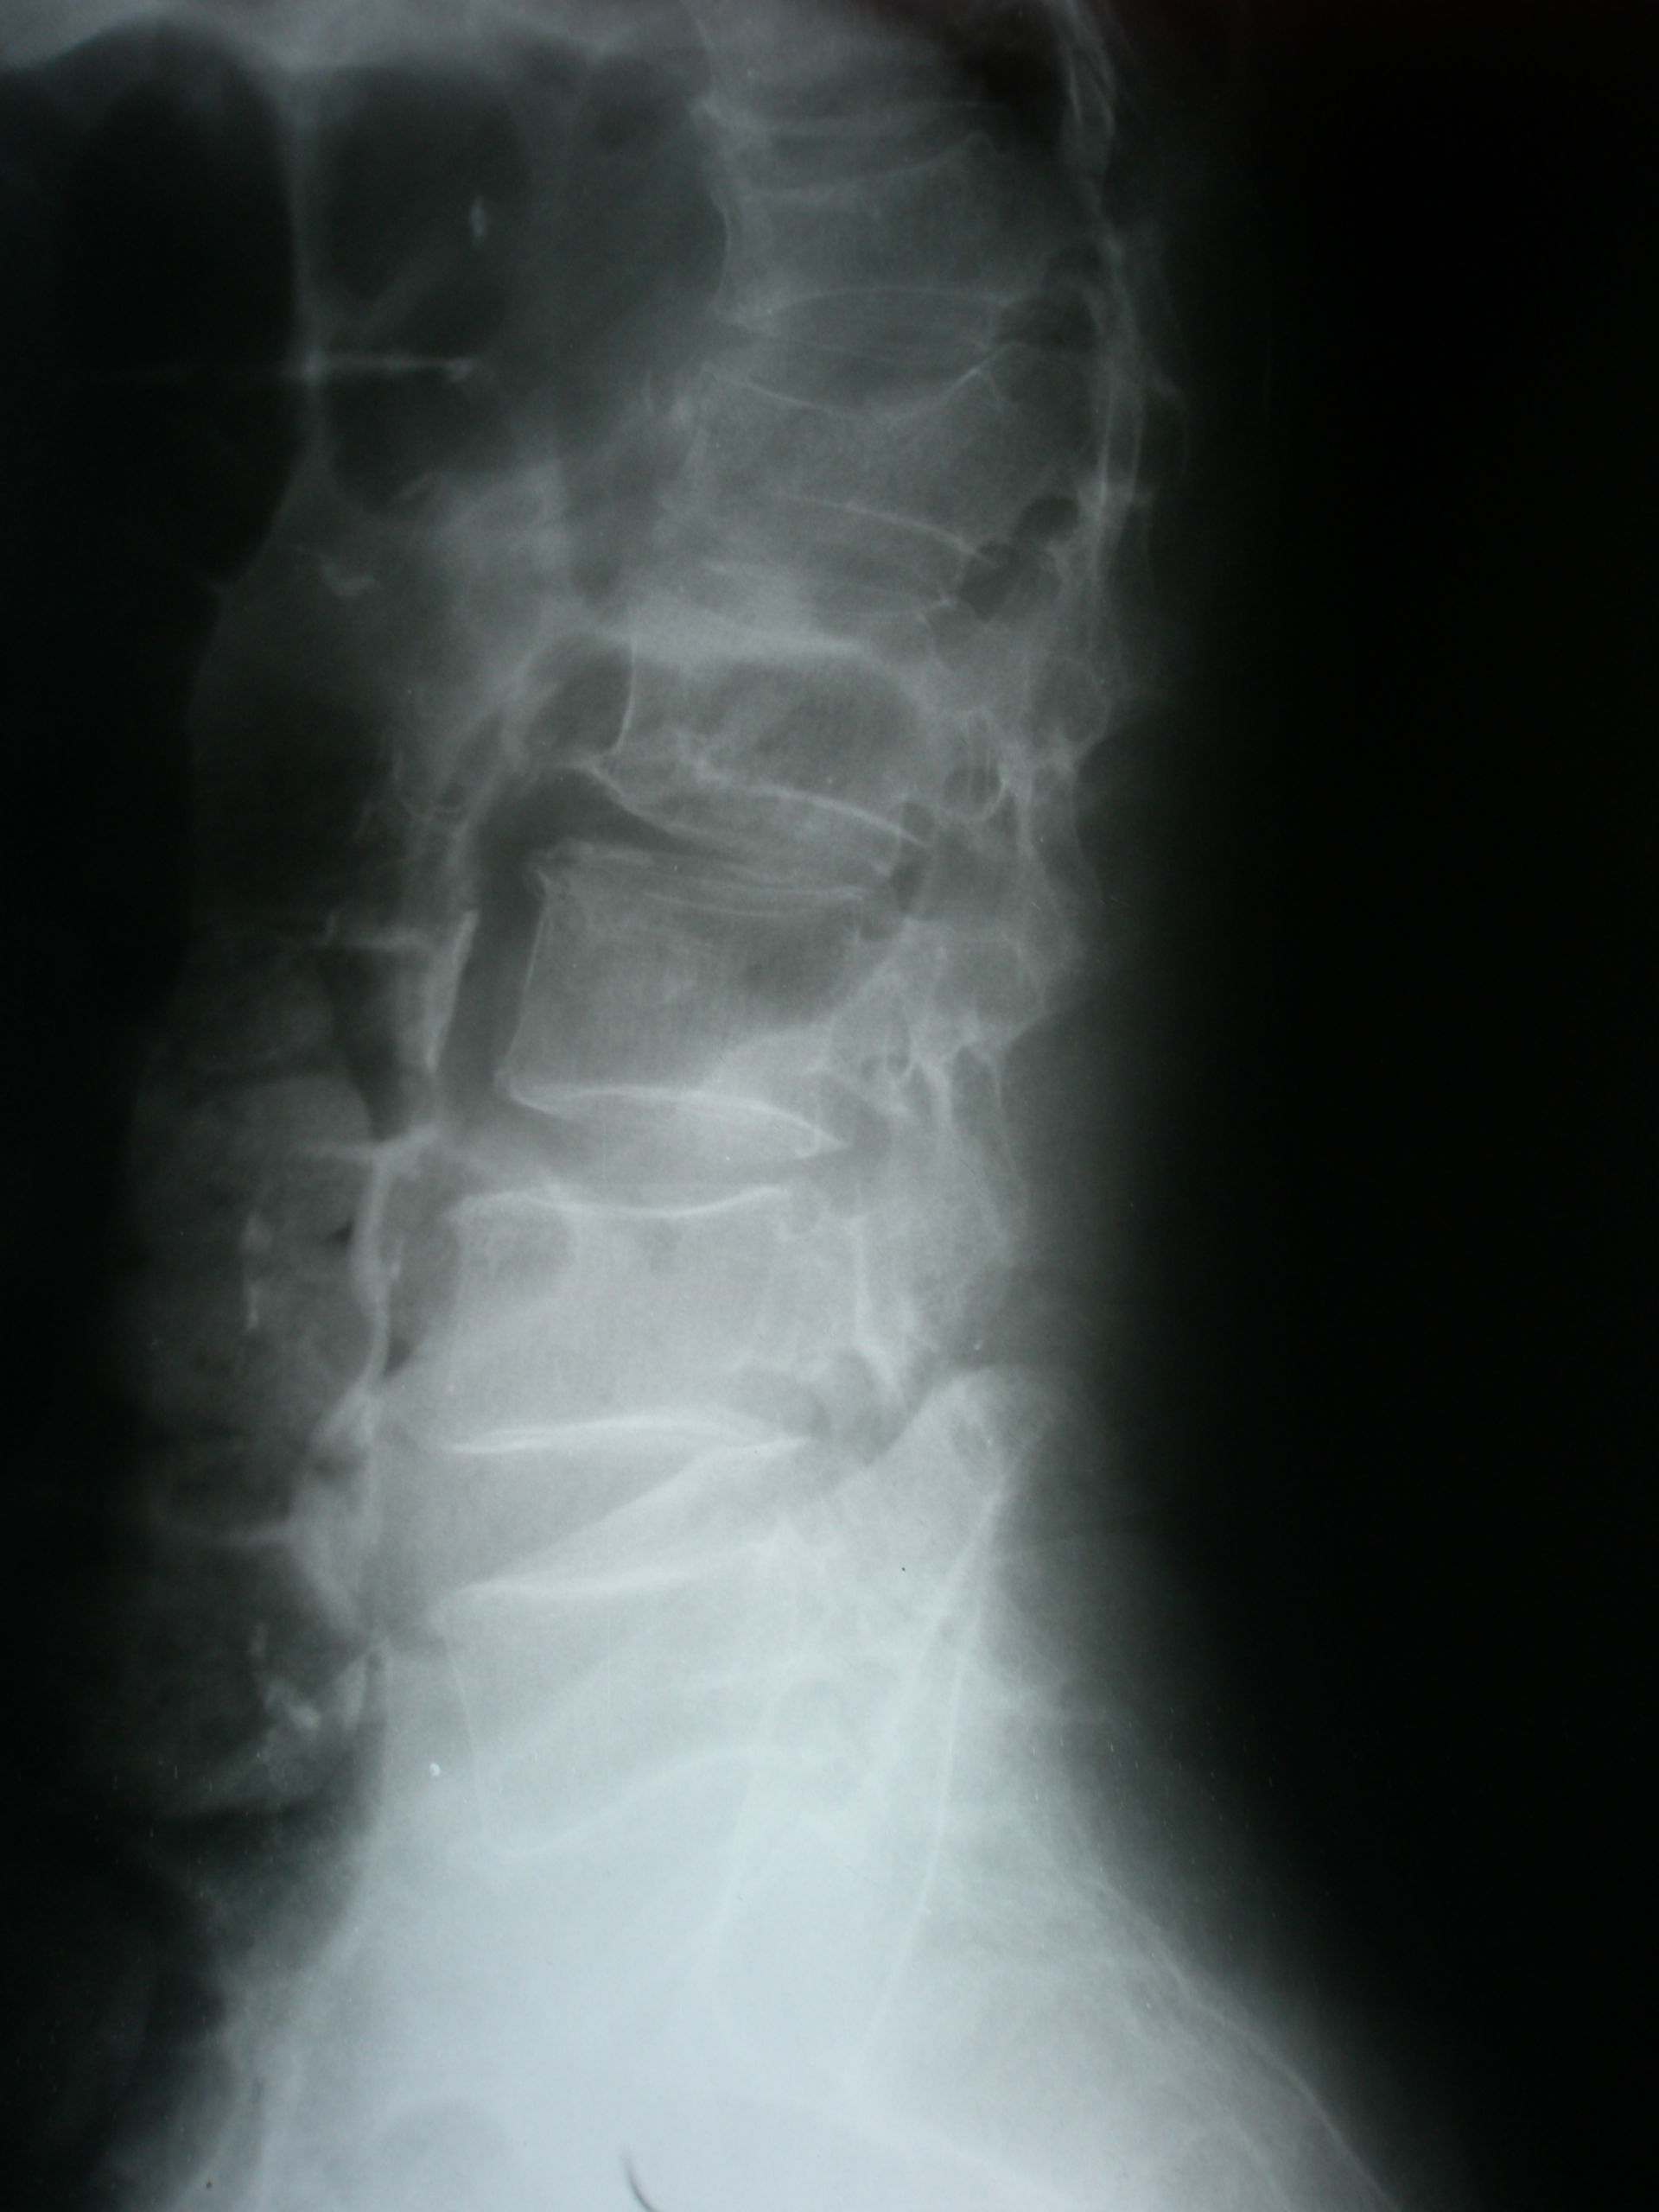 Frattura vertebrale